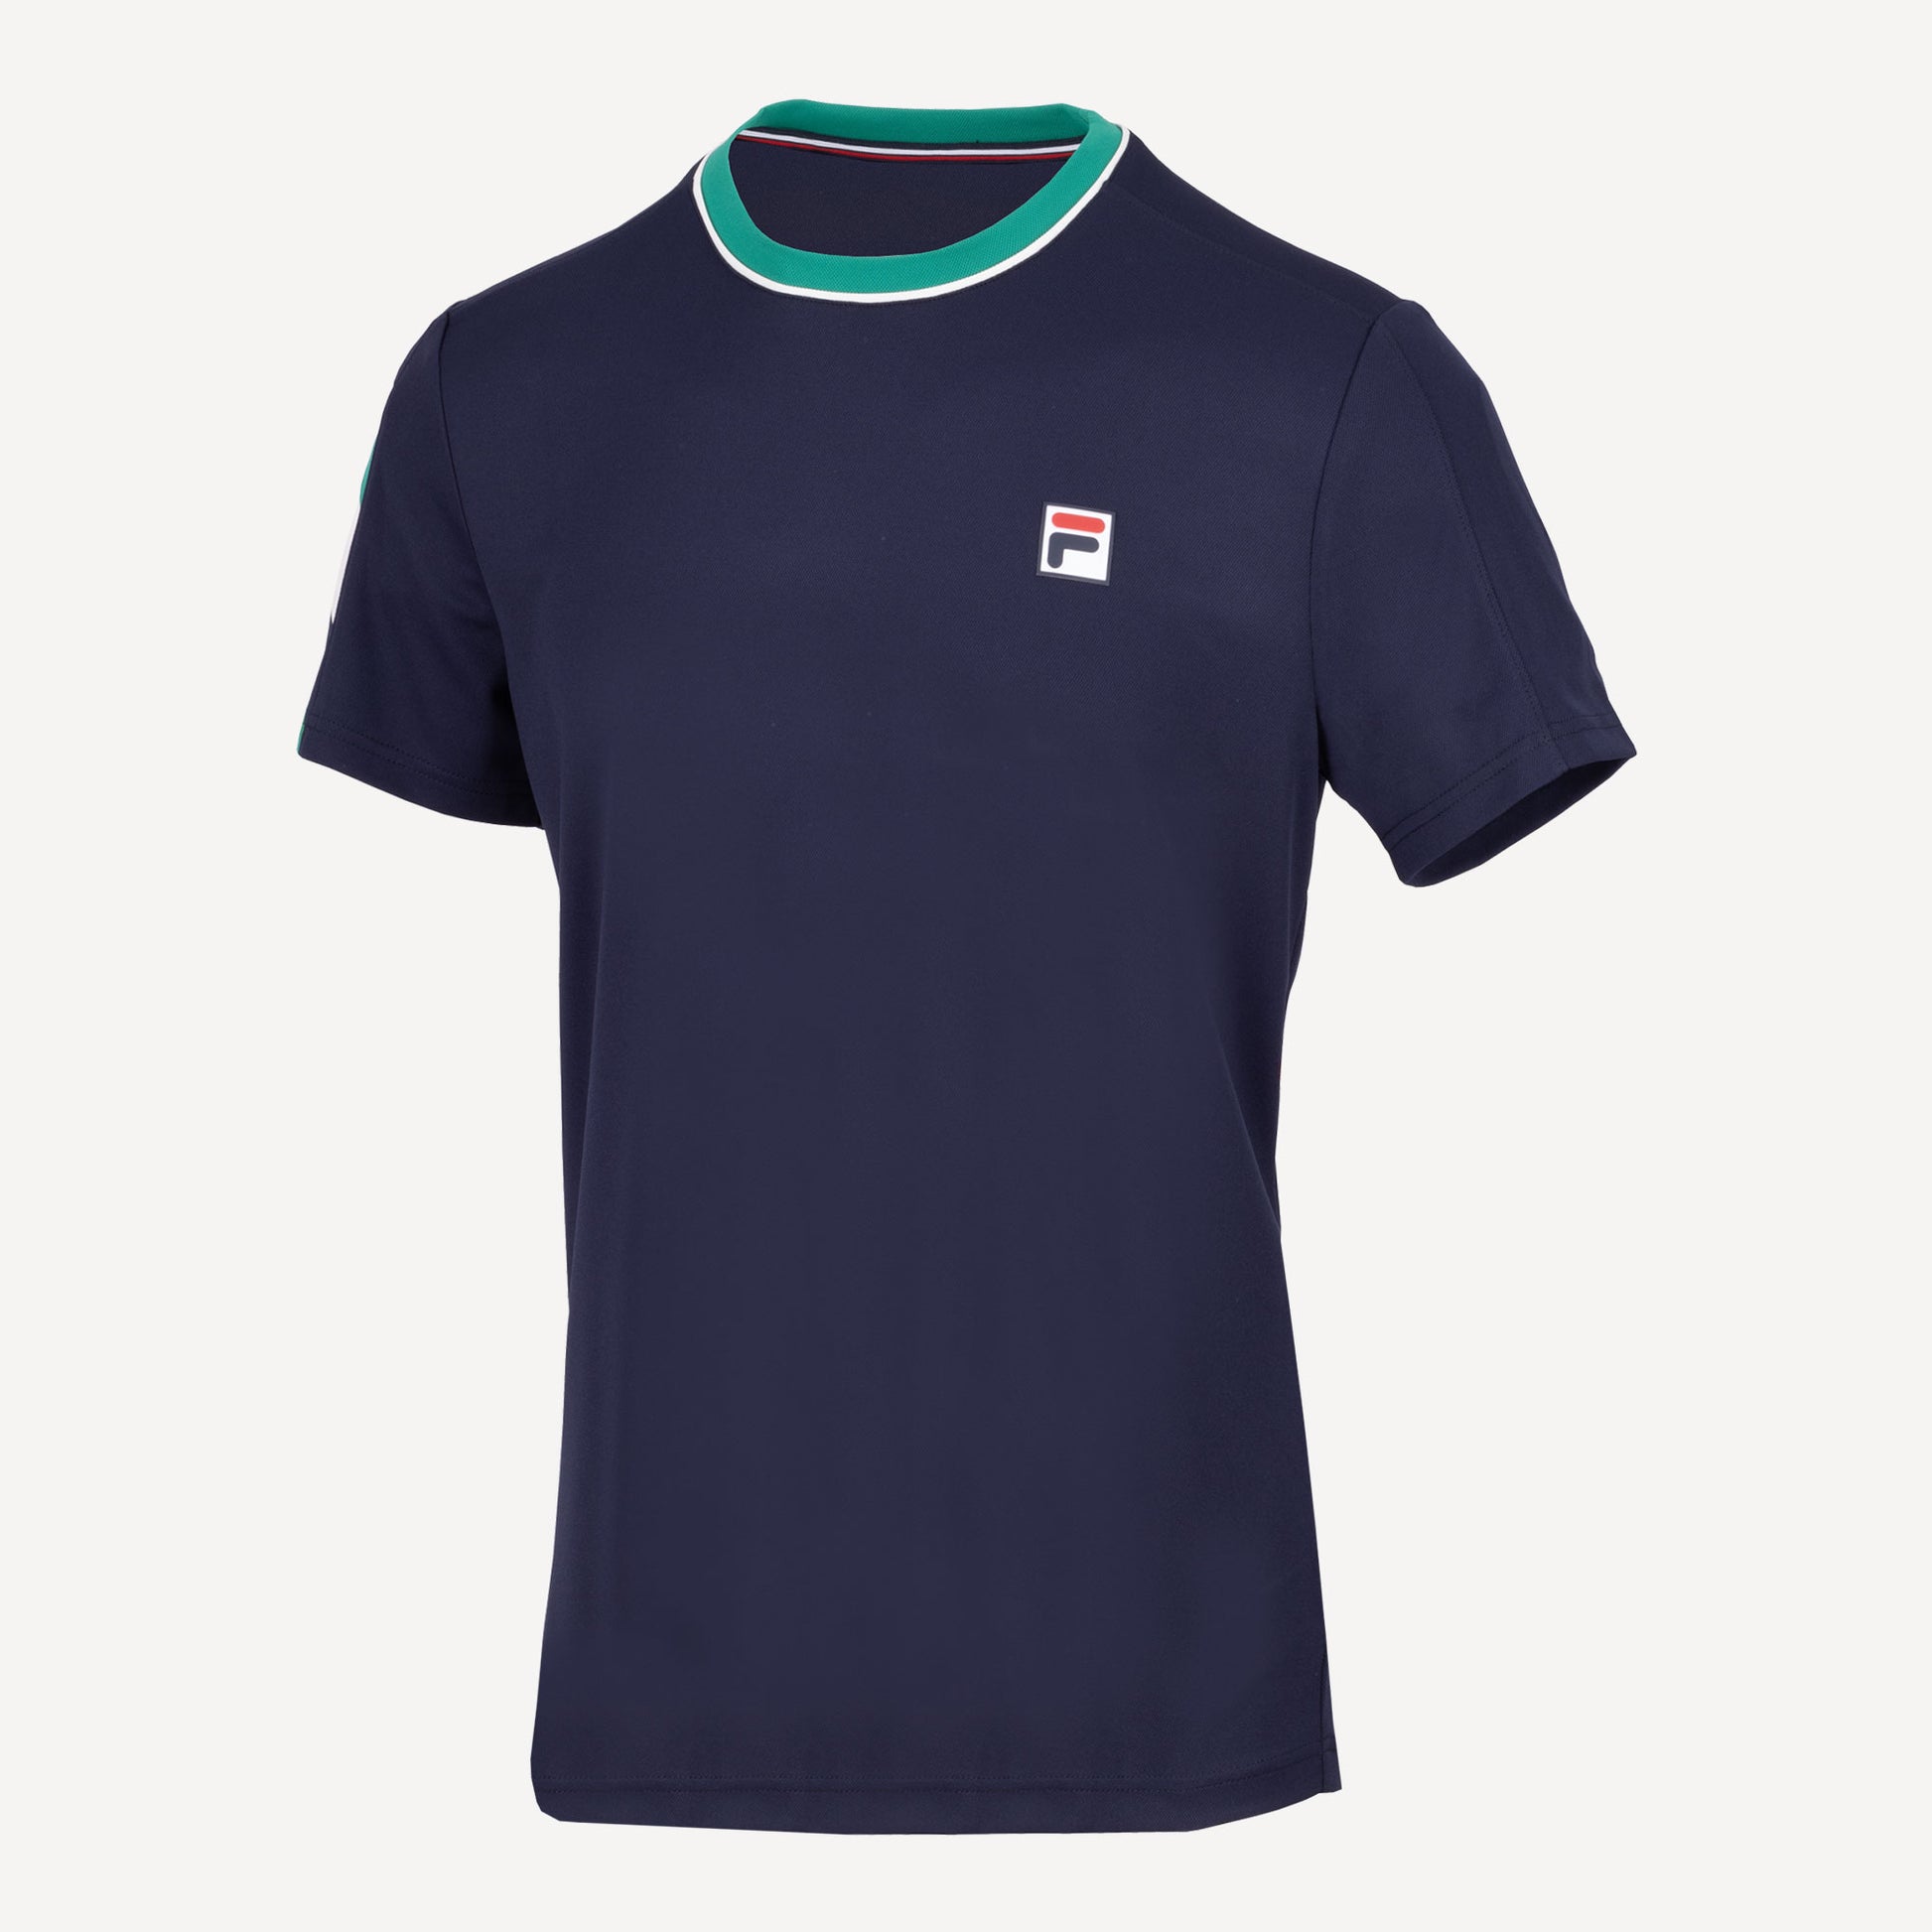 Fila Enzo Men's Tennis Shirt Dark Blue (1)